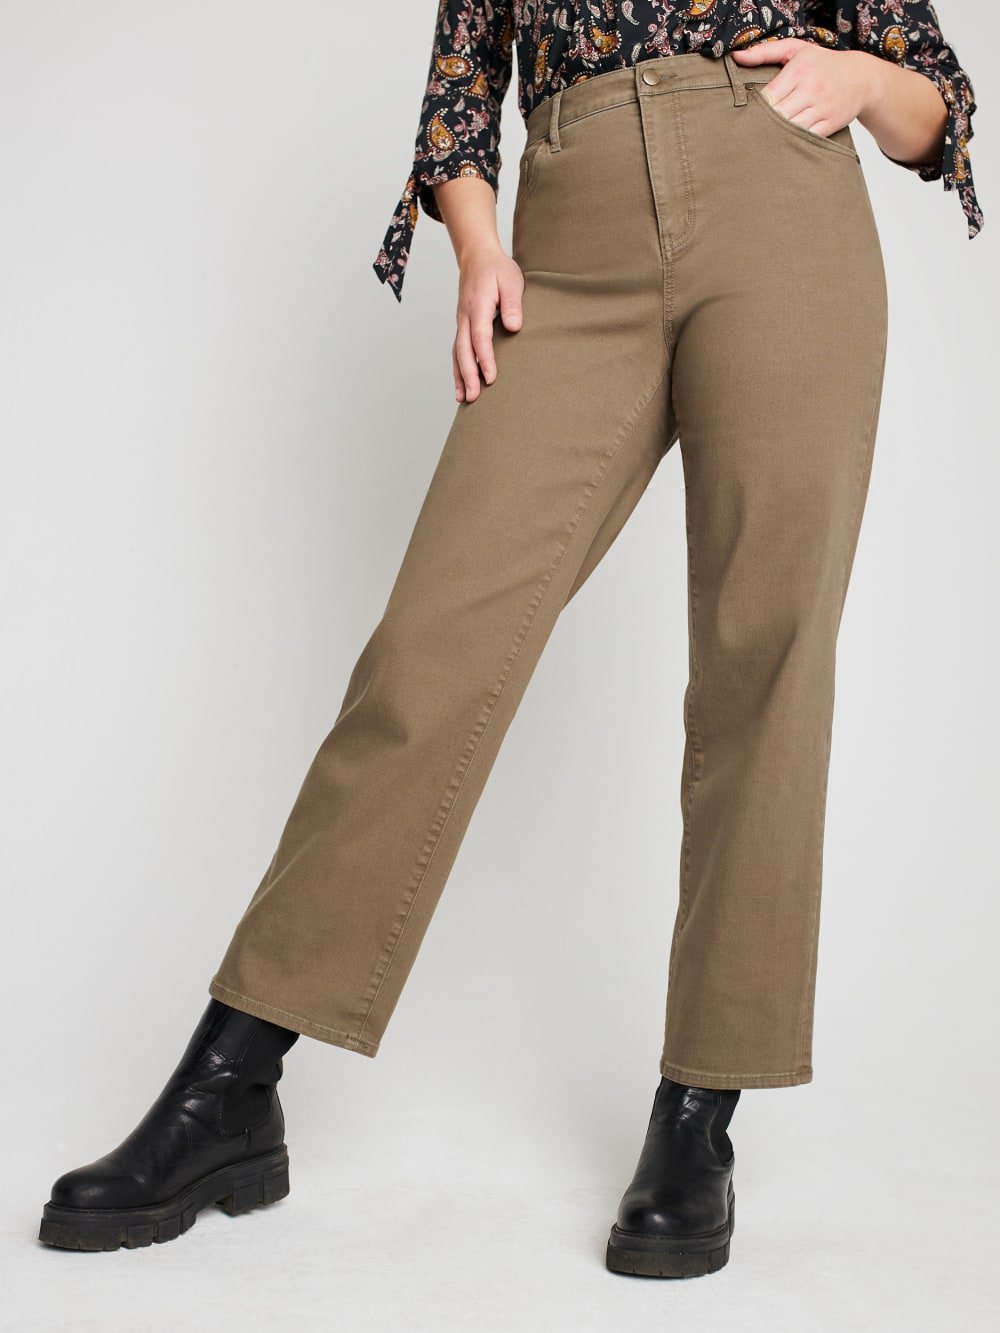 LL Bean Women's Size 20 Khaki Capris With Slits & Pockets